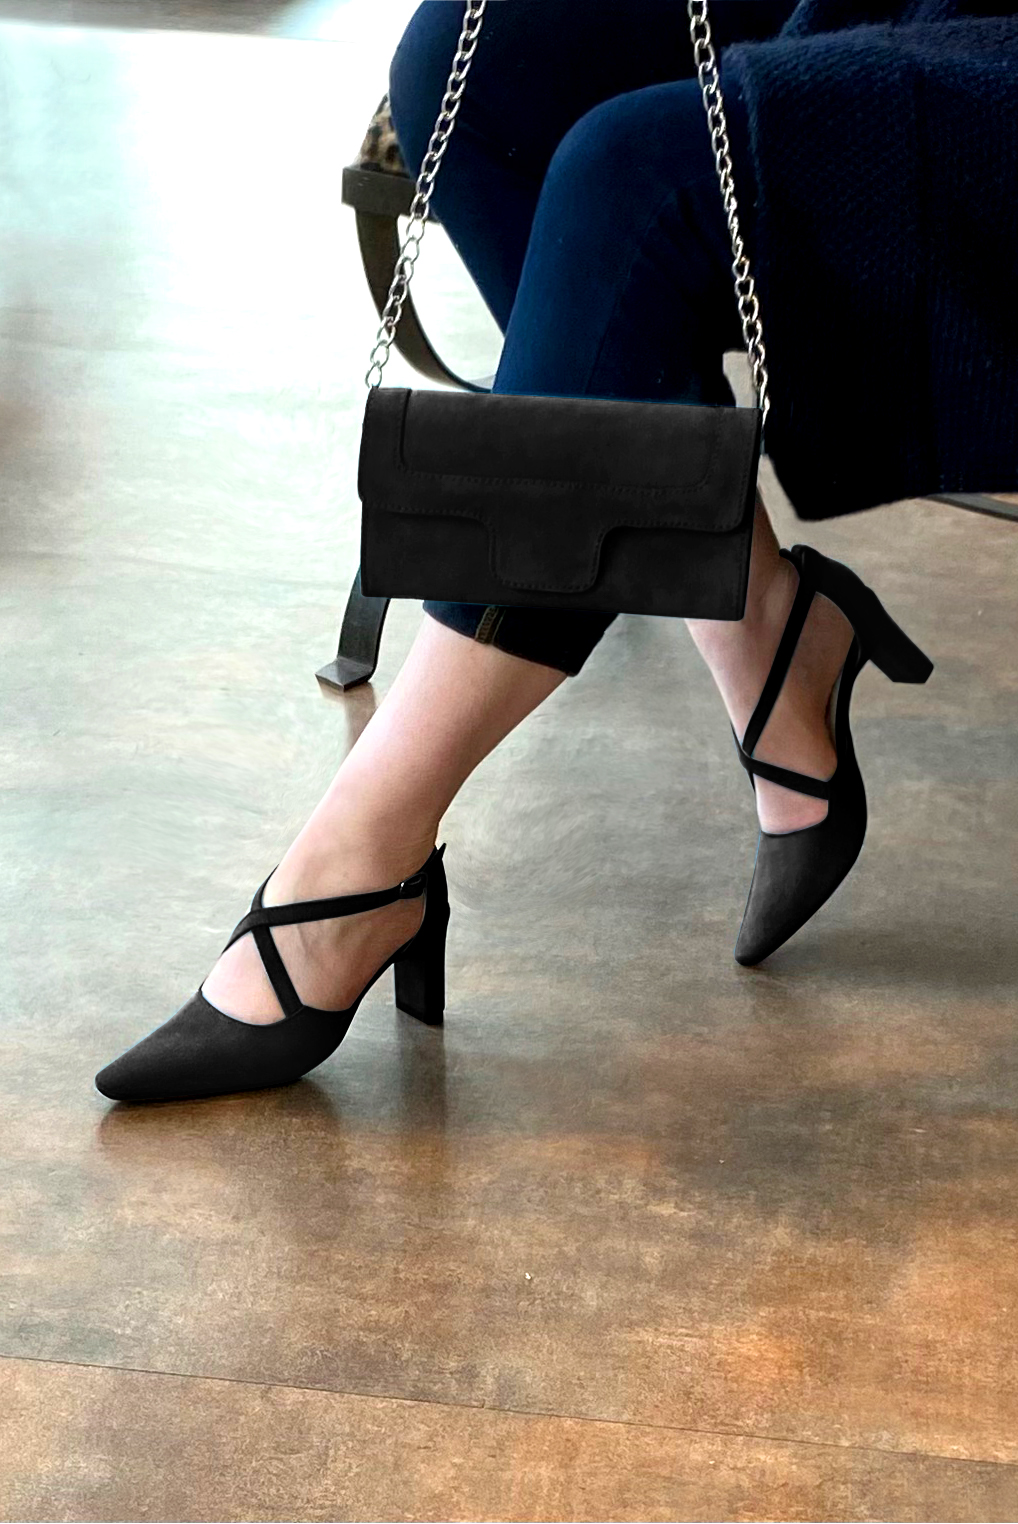 Matt black women's open side shoes, with crossed straps. Tapered toe. High comma heels. Worn view - Florence KOOIJMAN